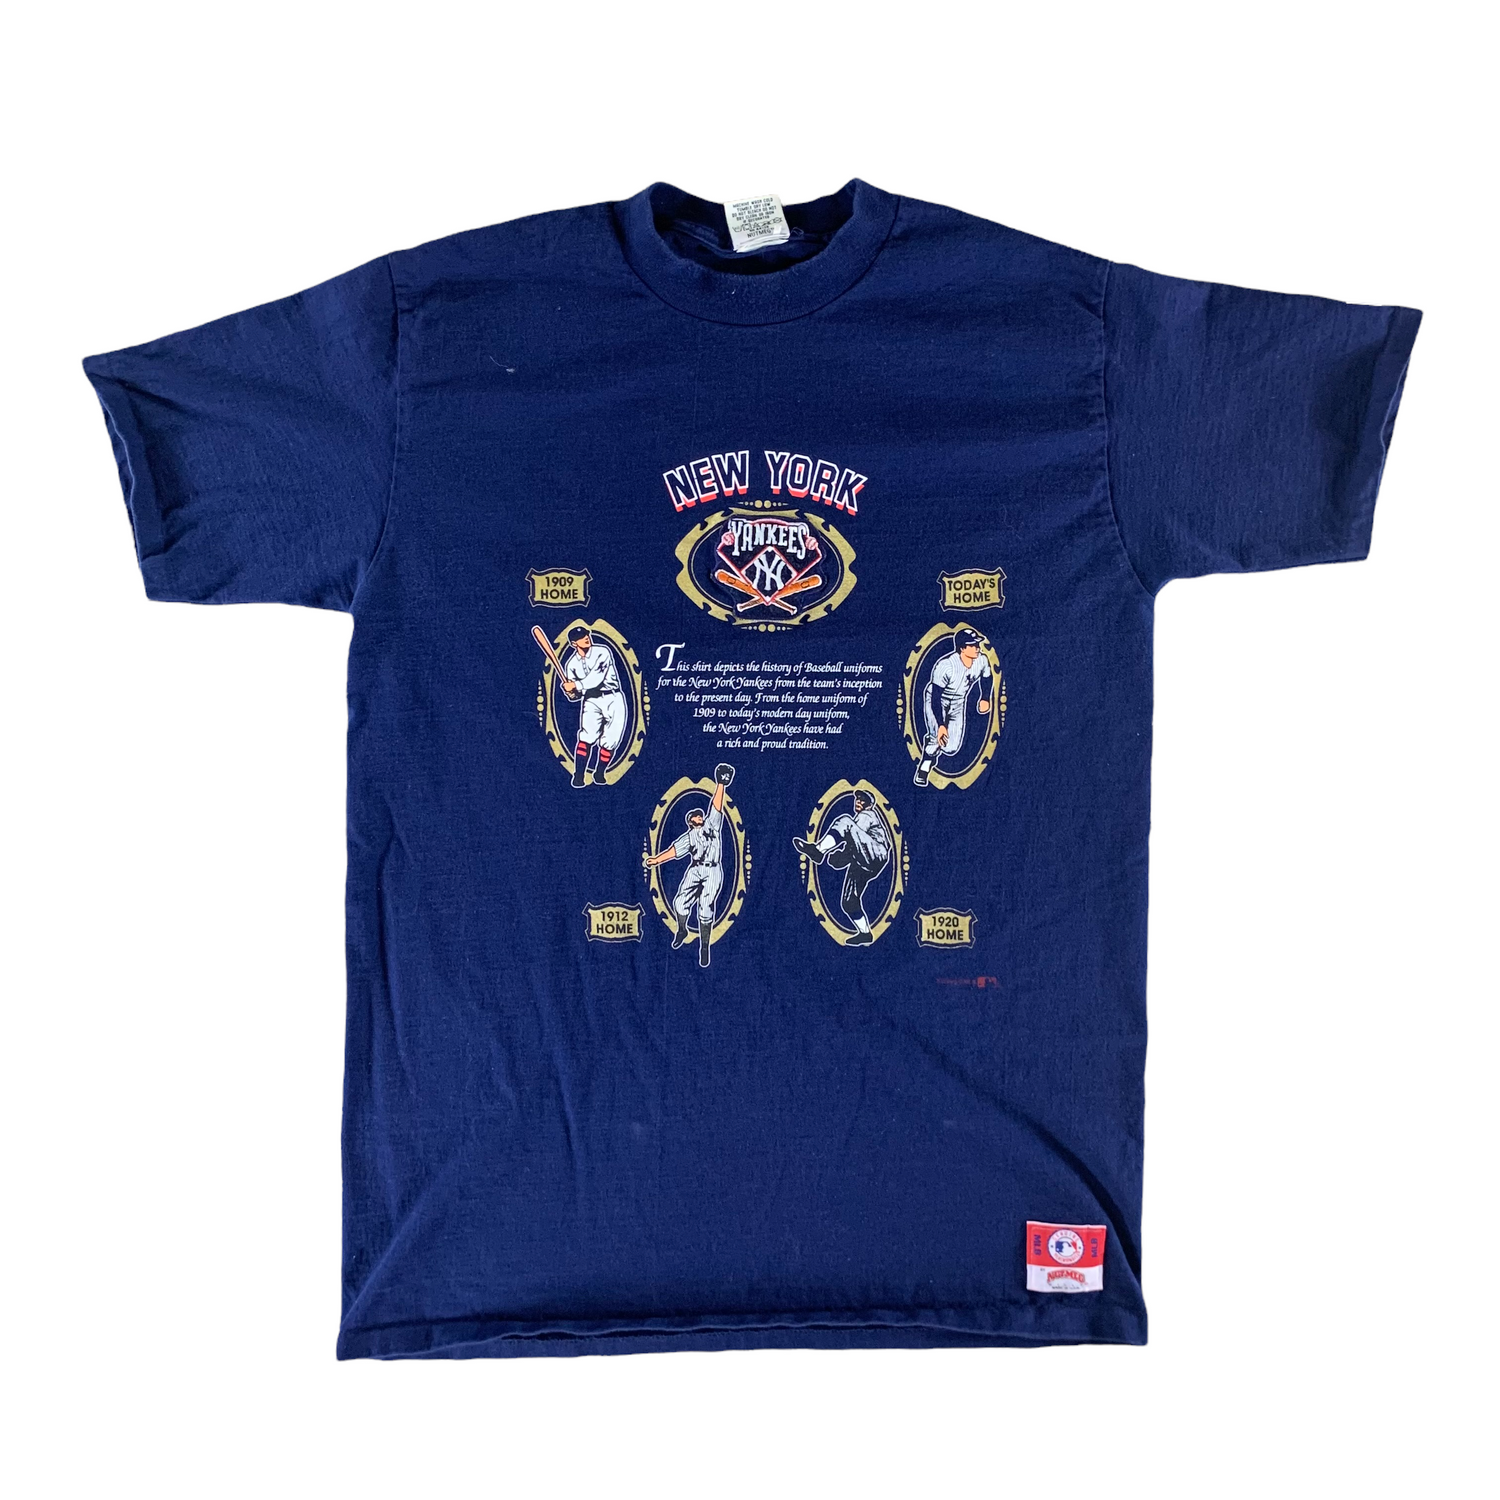 Vintage 1990s New York Yankees T-Shirt Size XL